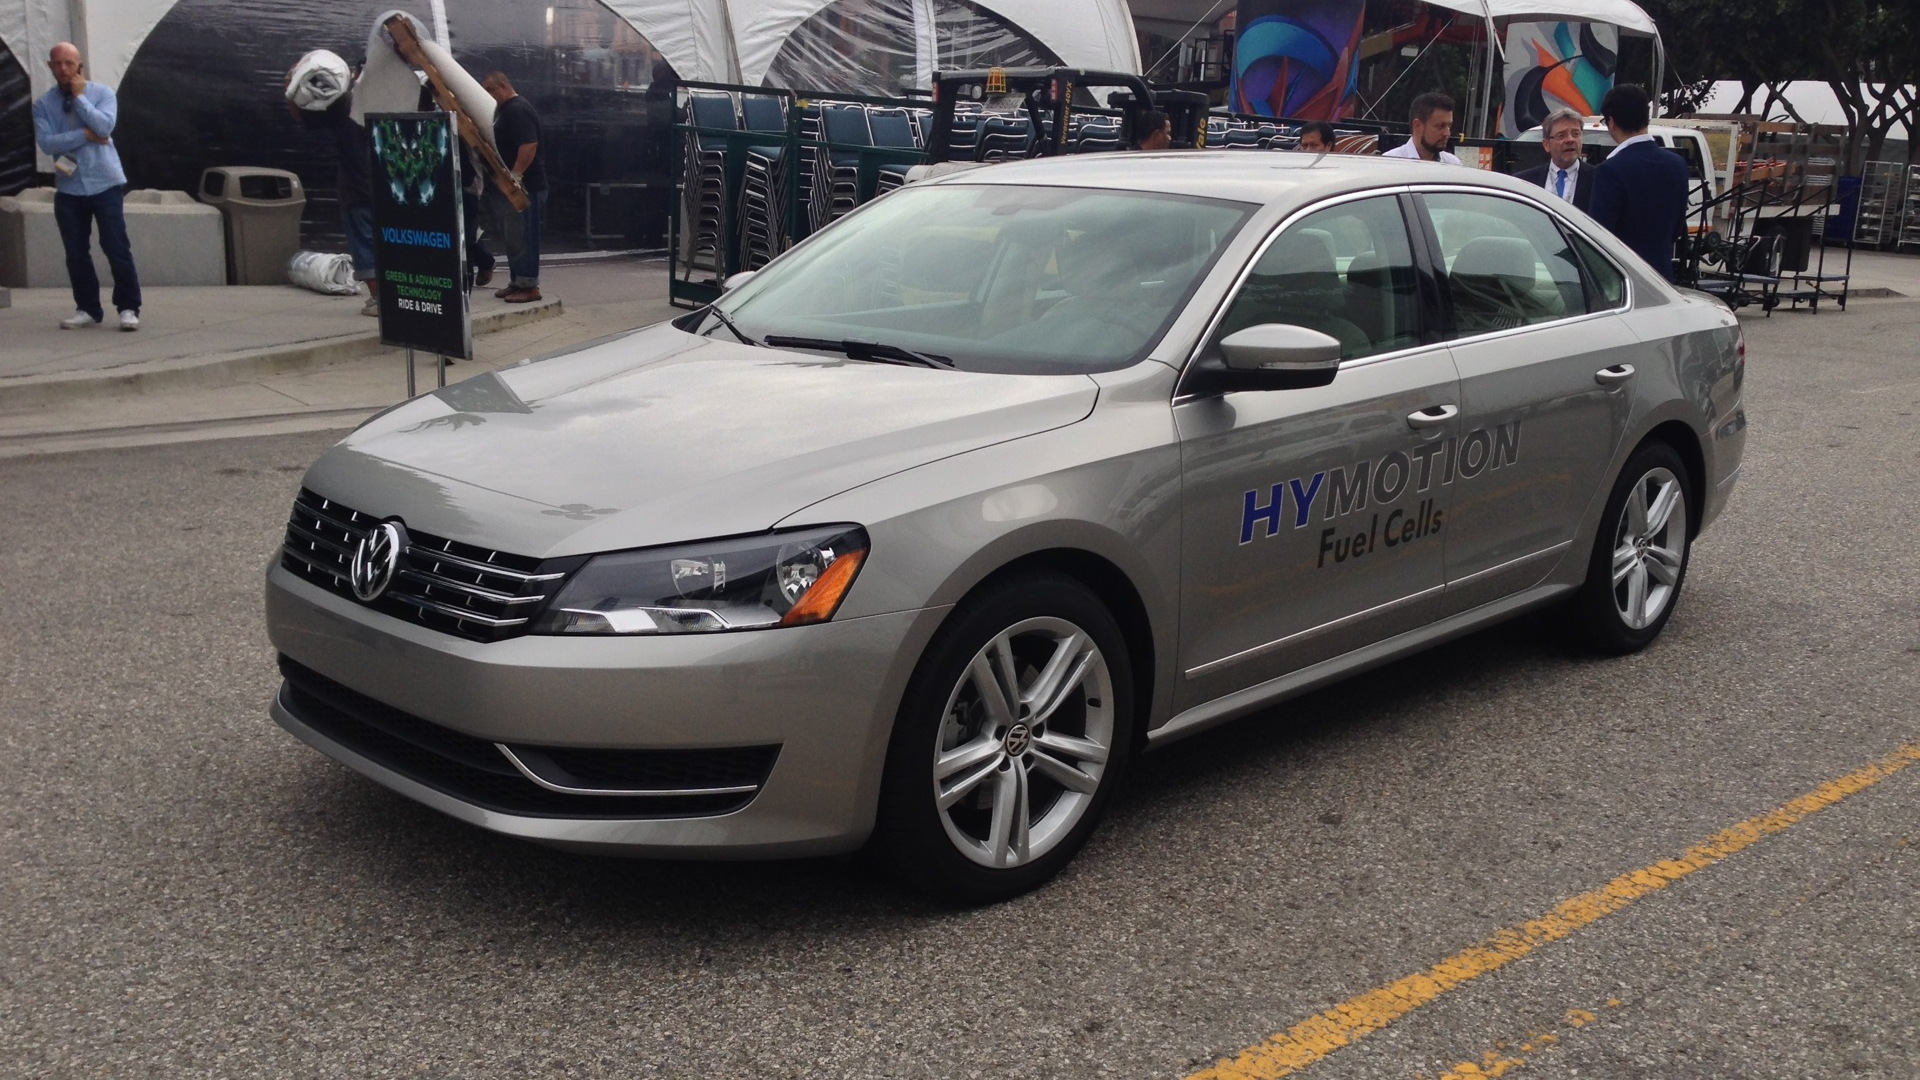 Volkswagen Passat HyMotion hydrogen fuel cell prototype  -  Los Angeles, November 2014